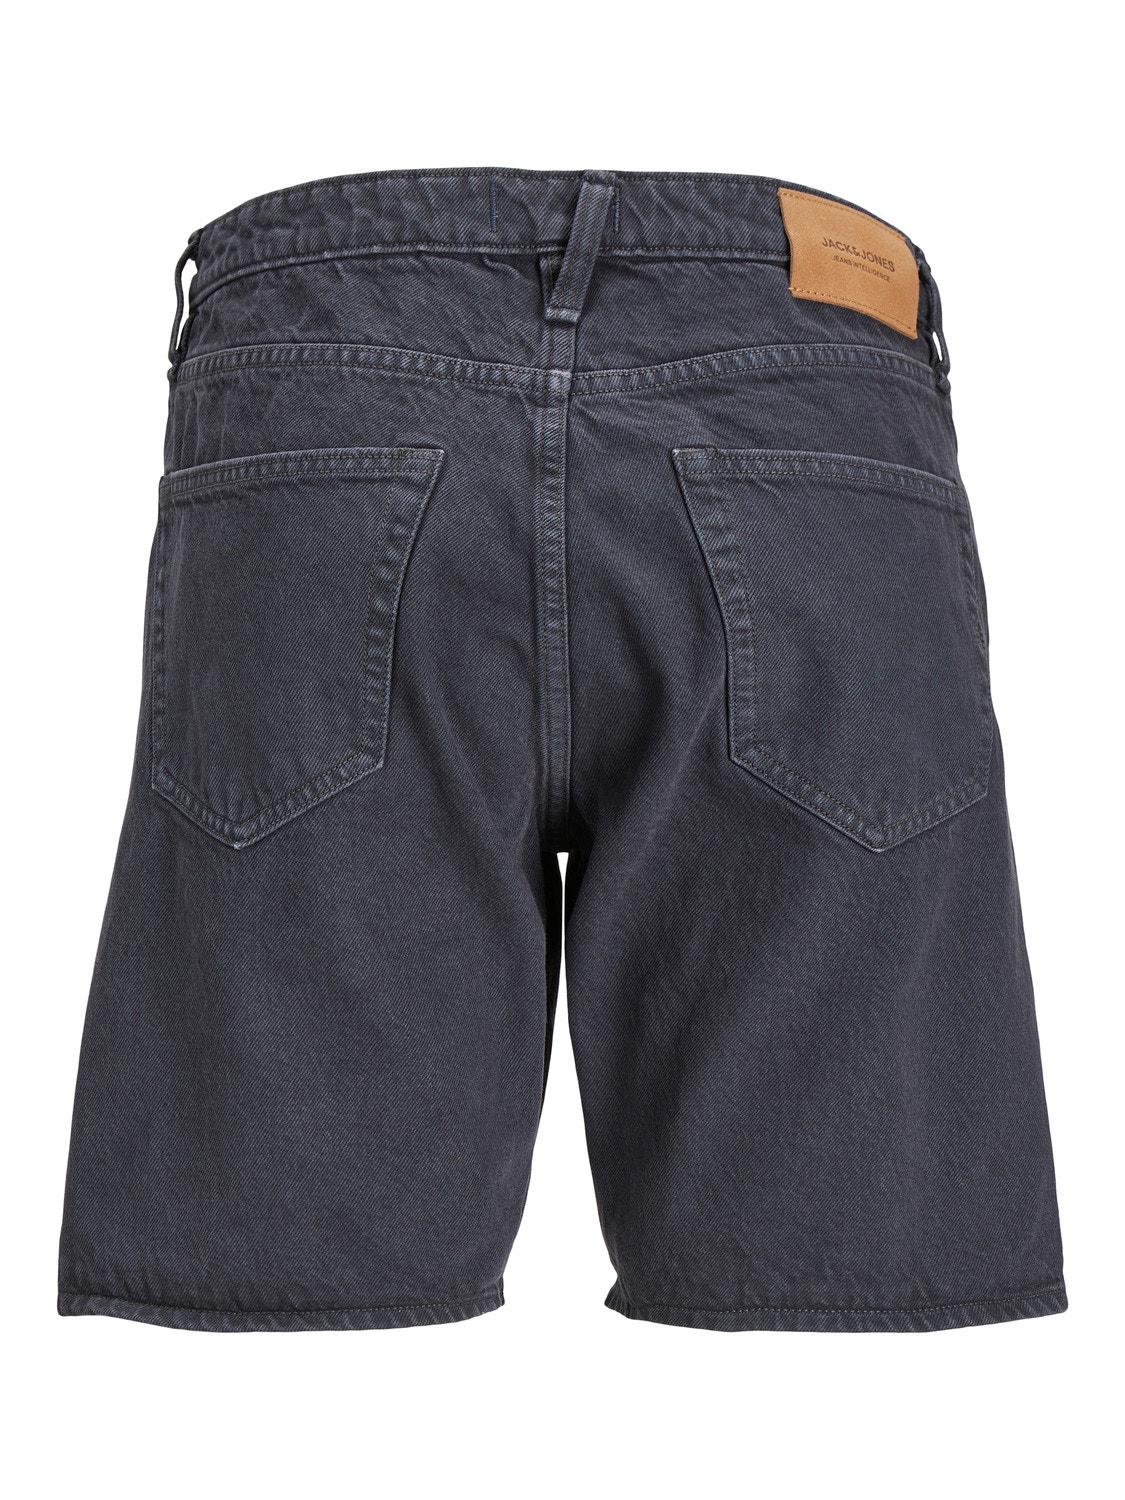 Jack & Jones Relaxed Fit Denim shorts -Asphalt - 12249035